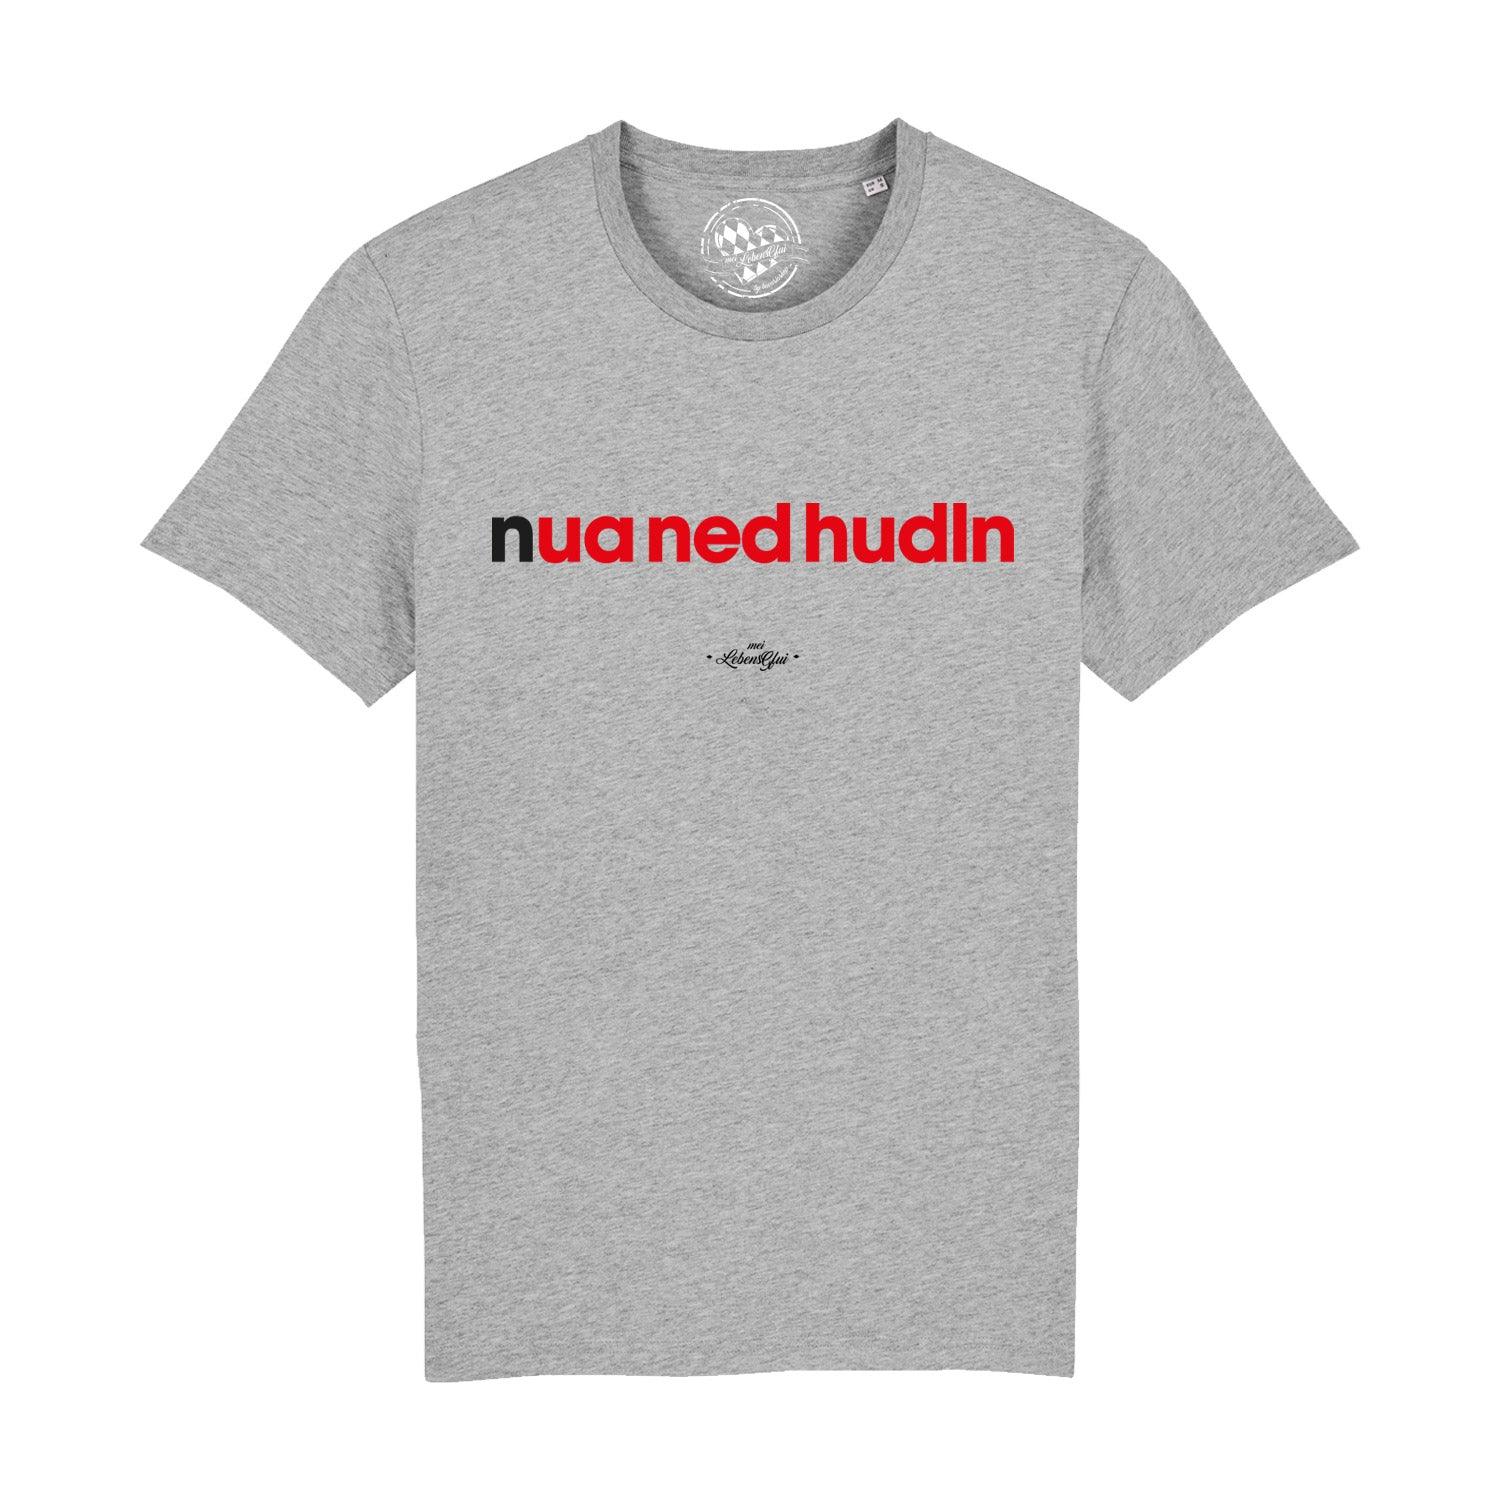 Herren T-Shirt "Nua ned hudln" - bavariashop - mei LebensGfui